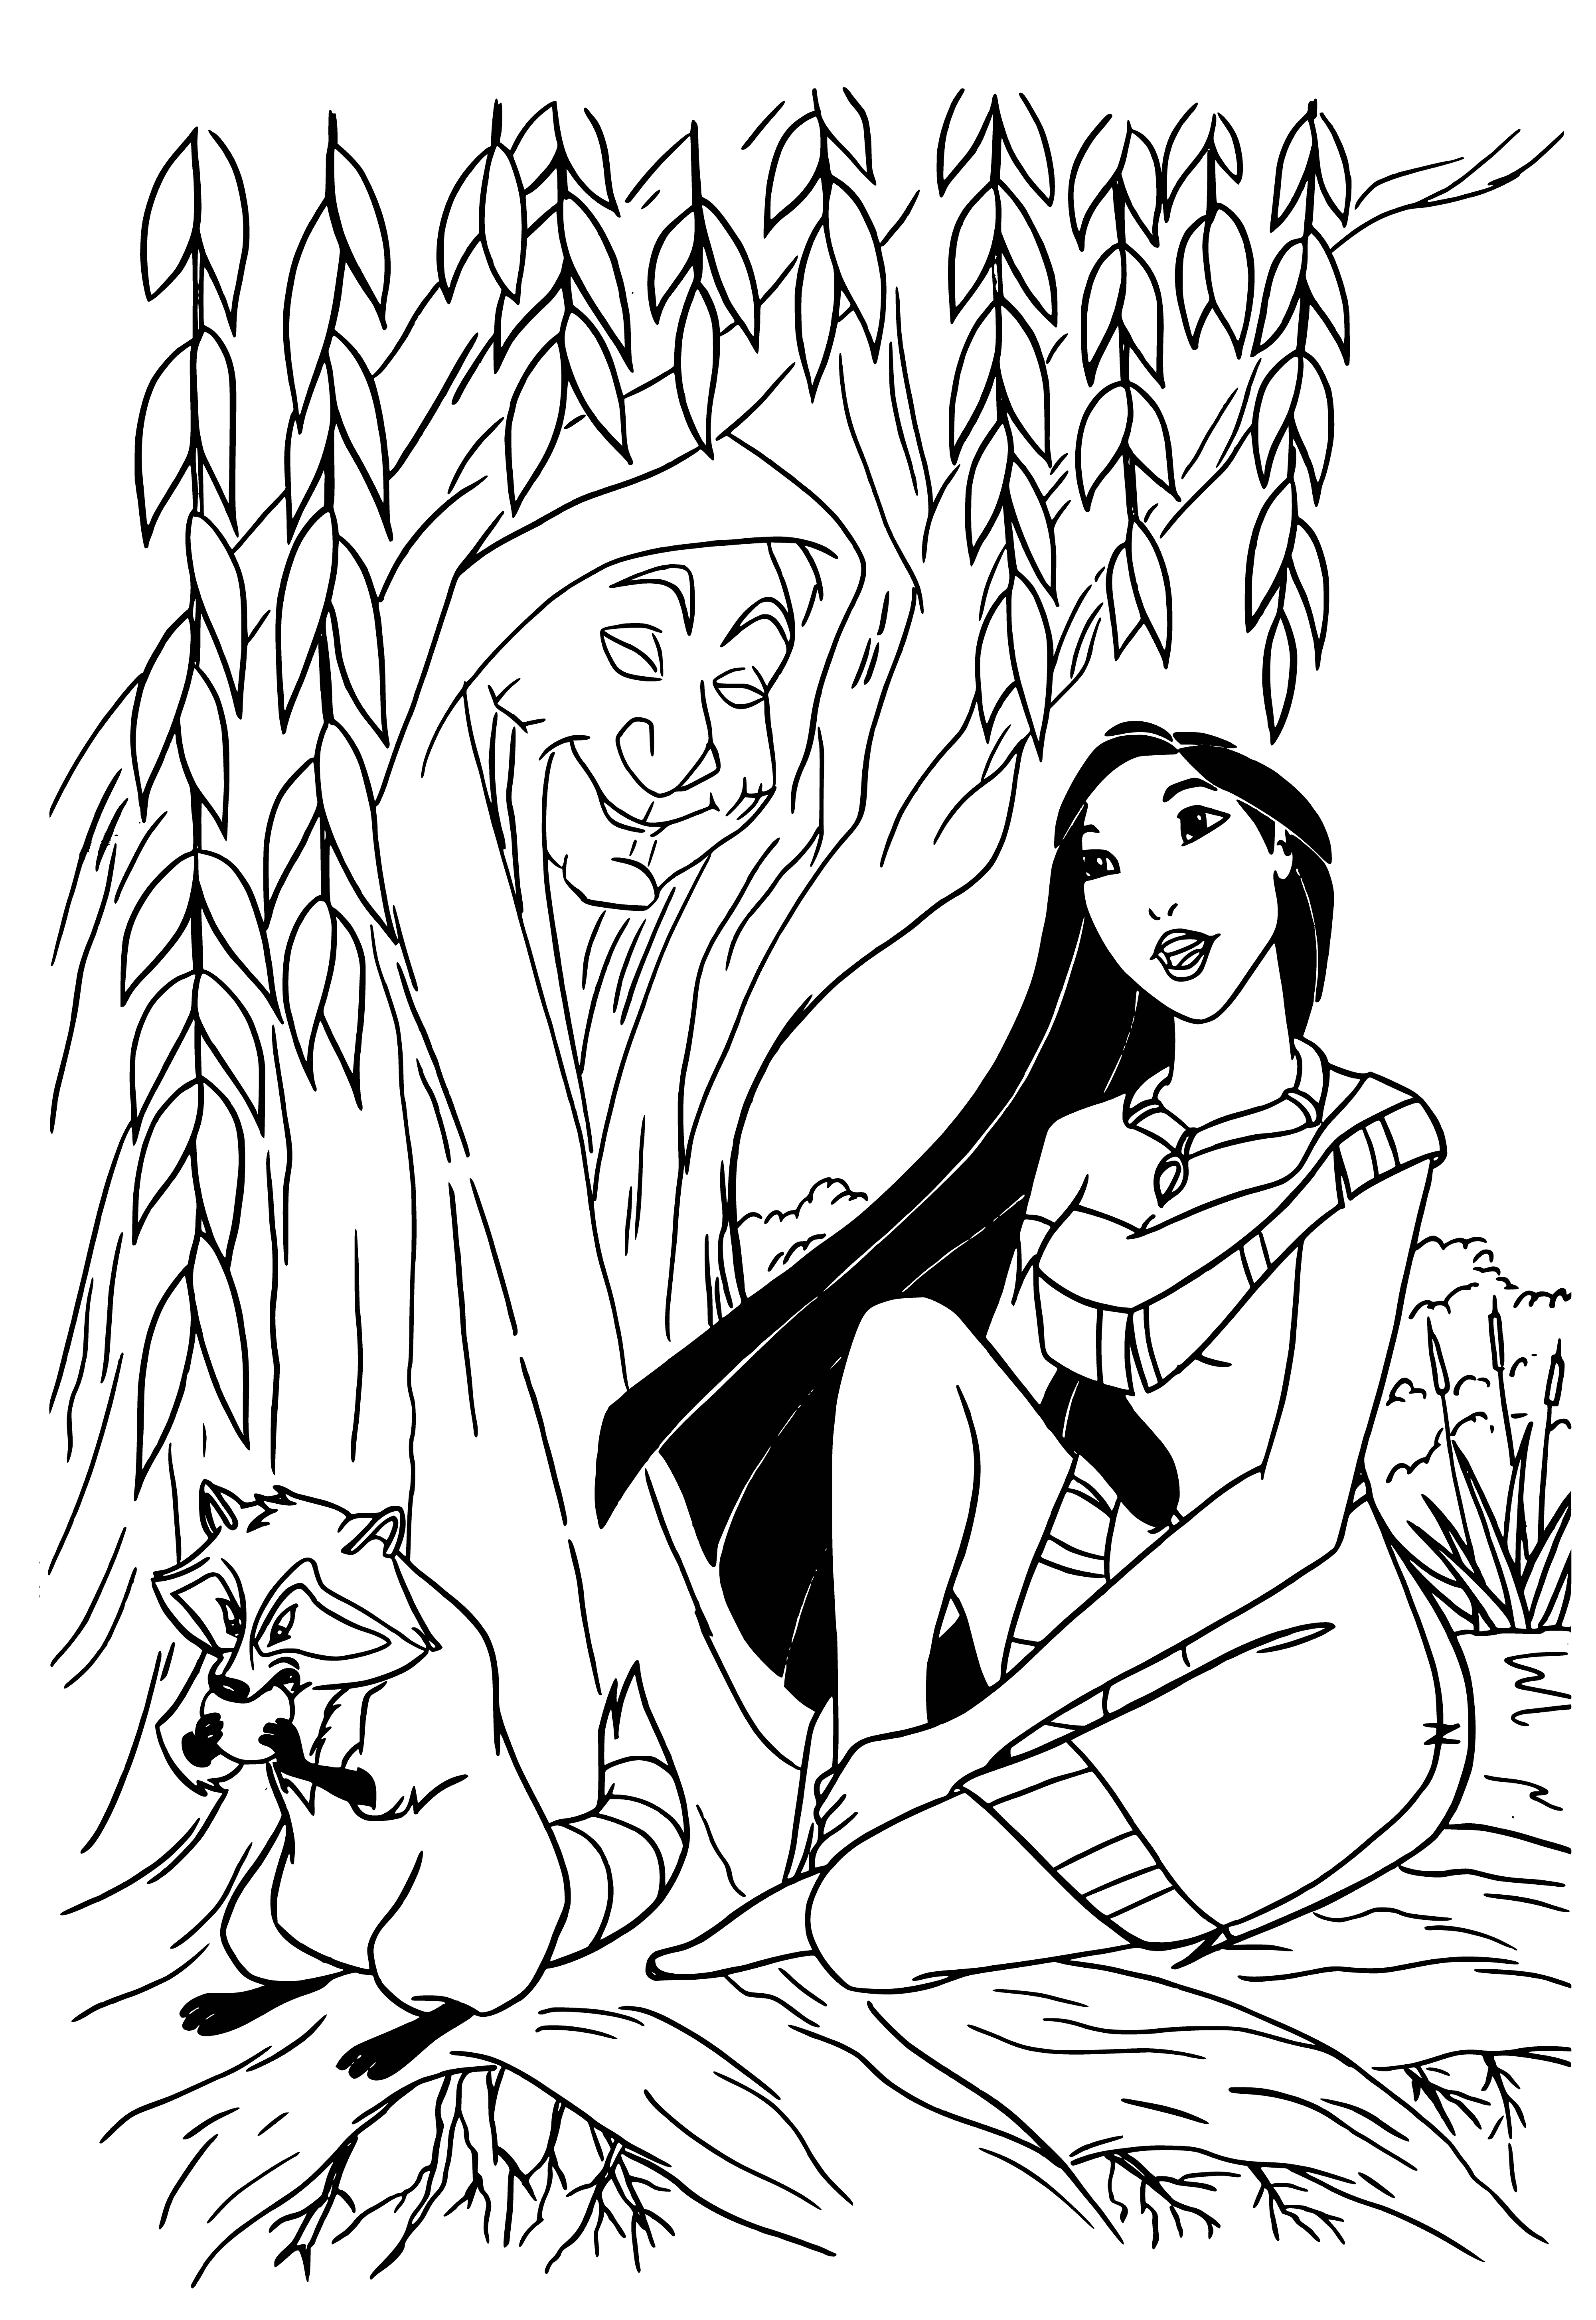 Grandma Iva and Pocahontas coloring page